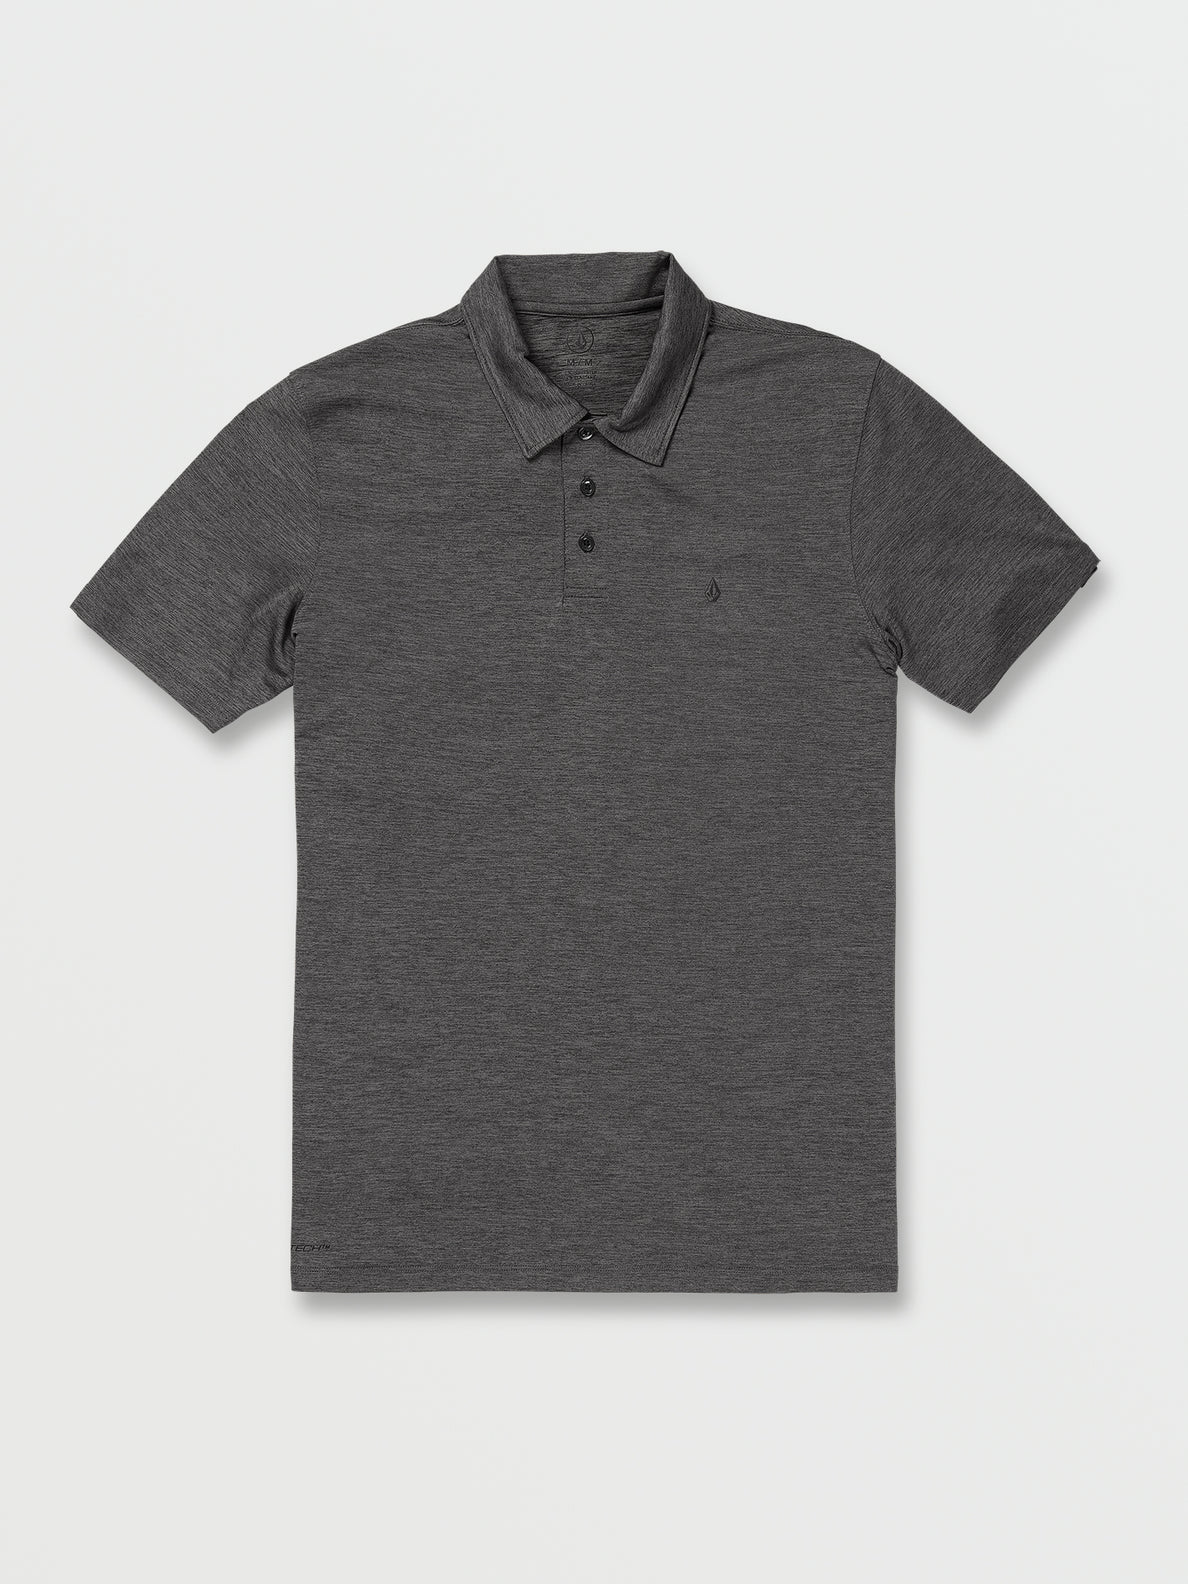 Hazard Pro Polo Short Sleeve Shirt - Storm Cloud (A0112304_STC) [F]